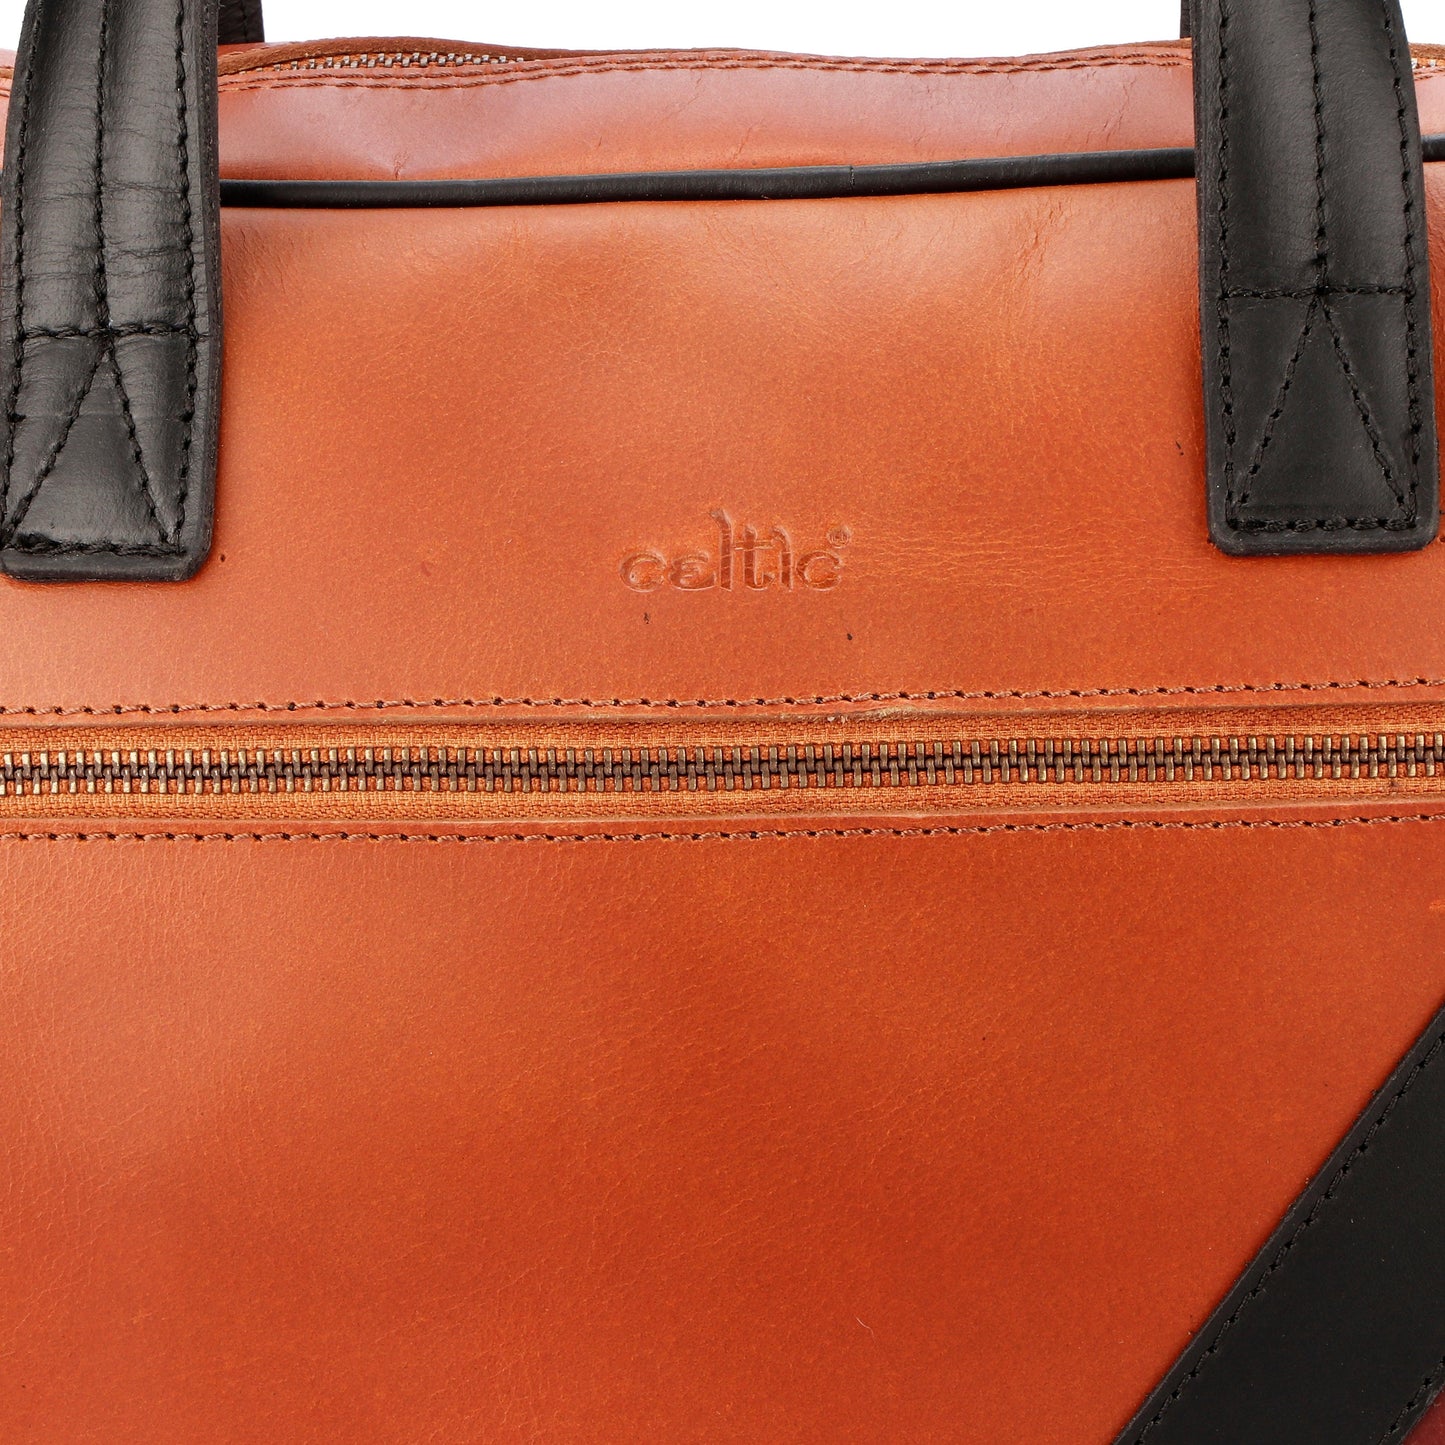 Celtic multicolor premium leather laptop bag for men and women's - CELTICINDIA